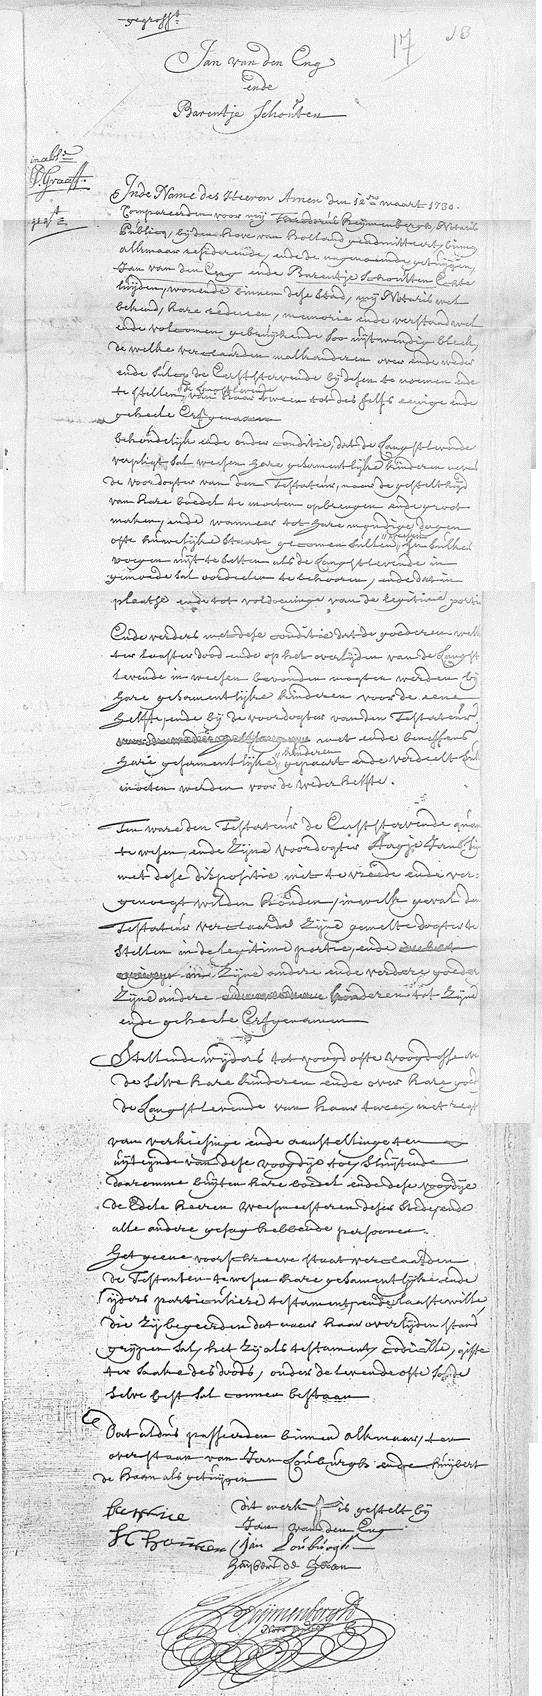 Testament Jan Cornelisz van den Engh (1680) x Barentje Schouten (1670) 12-03-1730 G.A. Alkmaar Inv. No. 452, fol.17 gegrofft Jan van den Eng ende Barentje Schouten Inabse J.D.